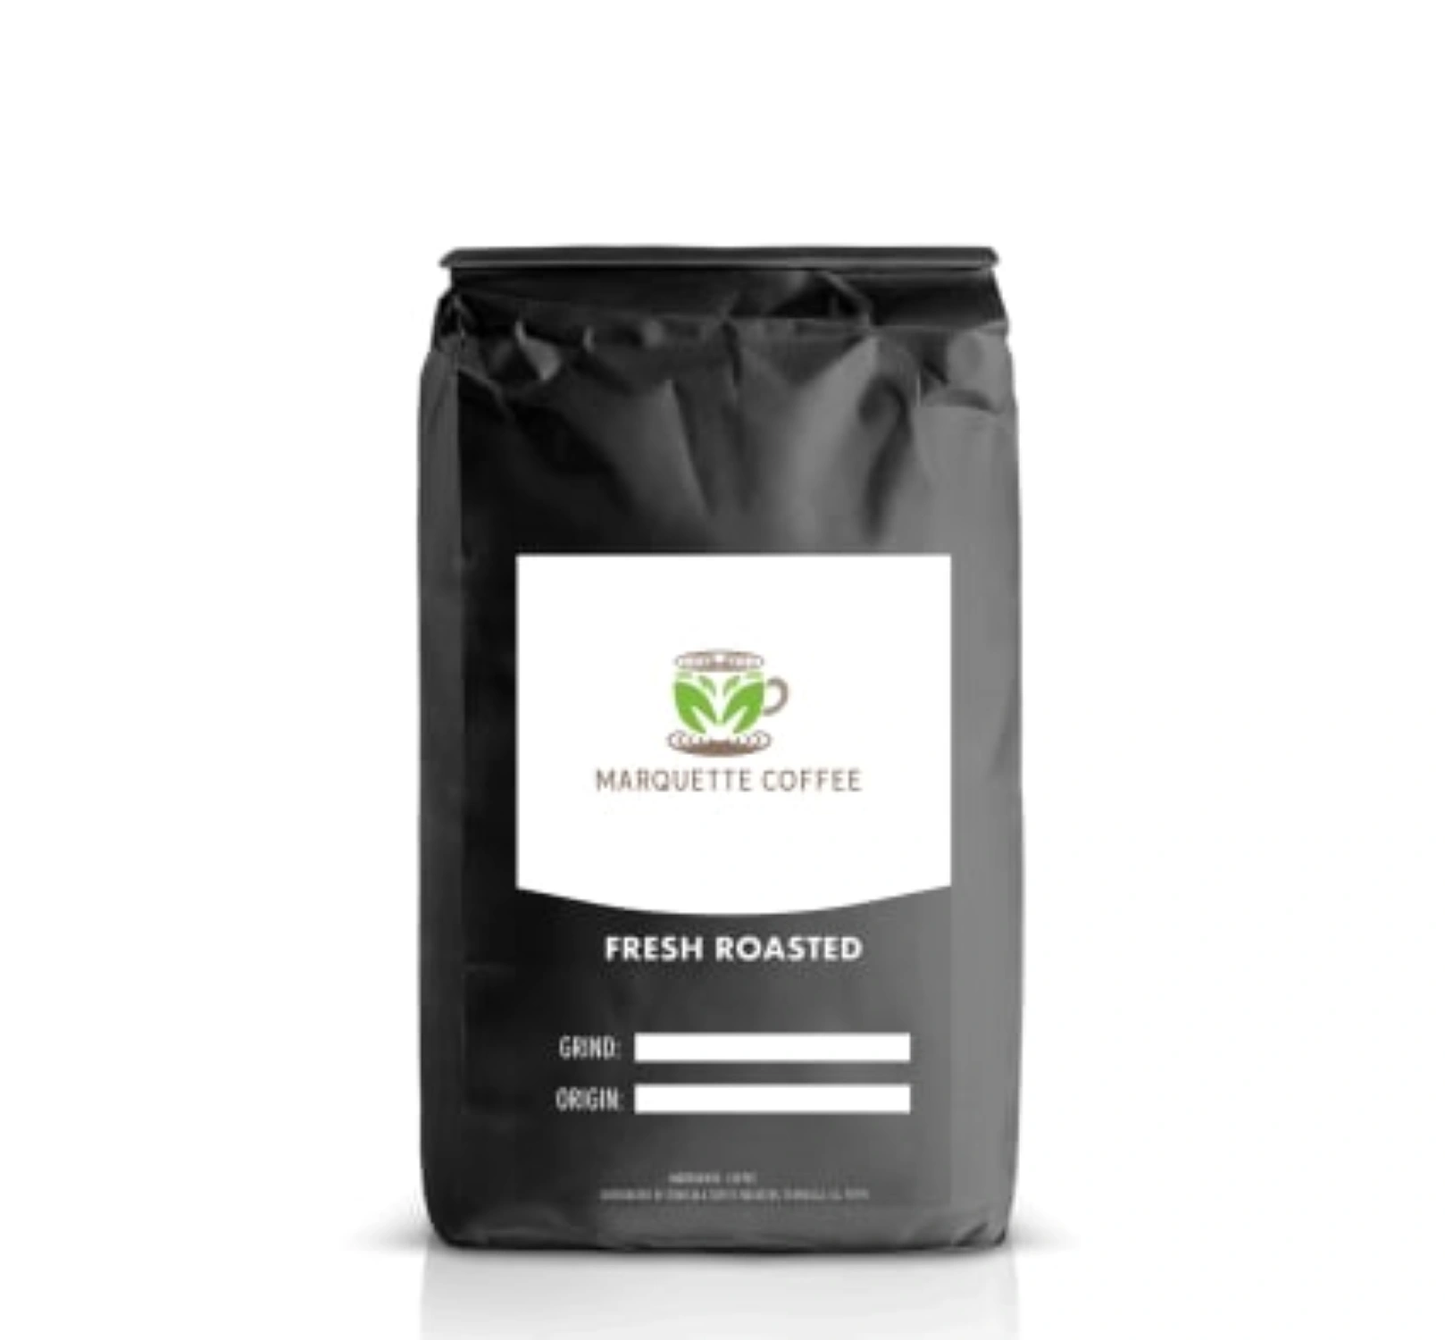 Marquette Coffee - Tanzania Blend Coffee (Medium-Light Roast) - JML Coffee